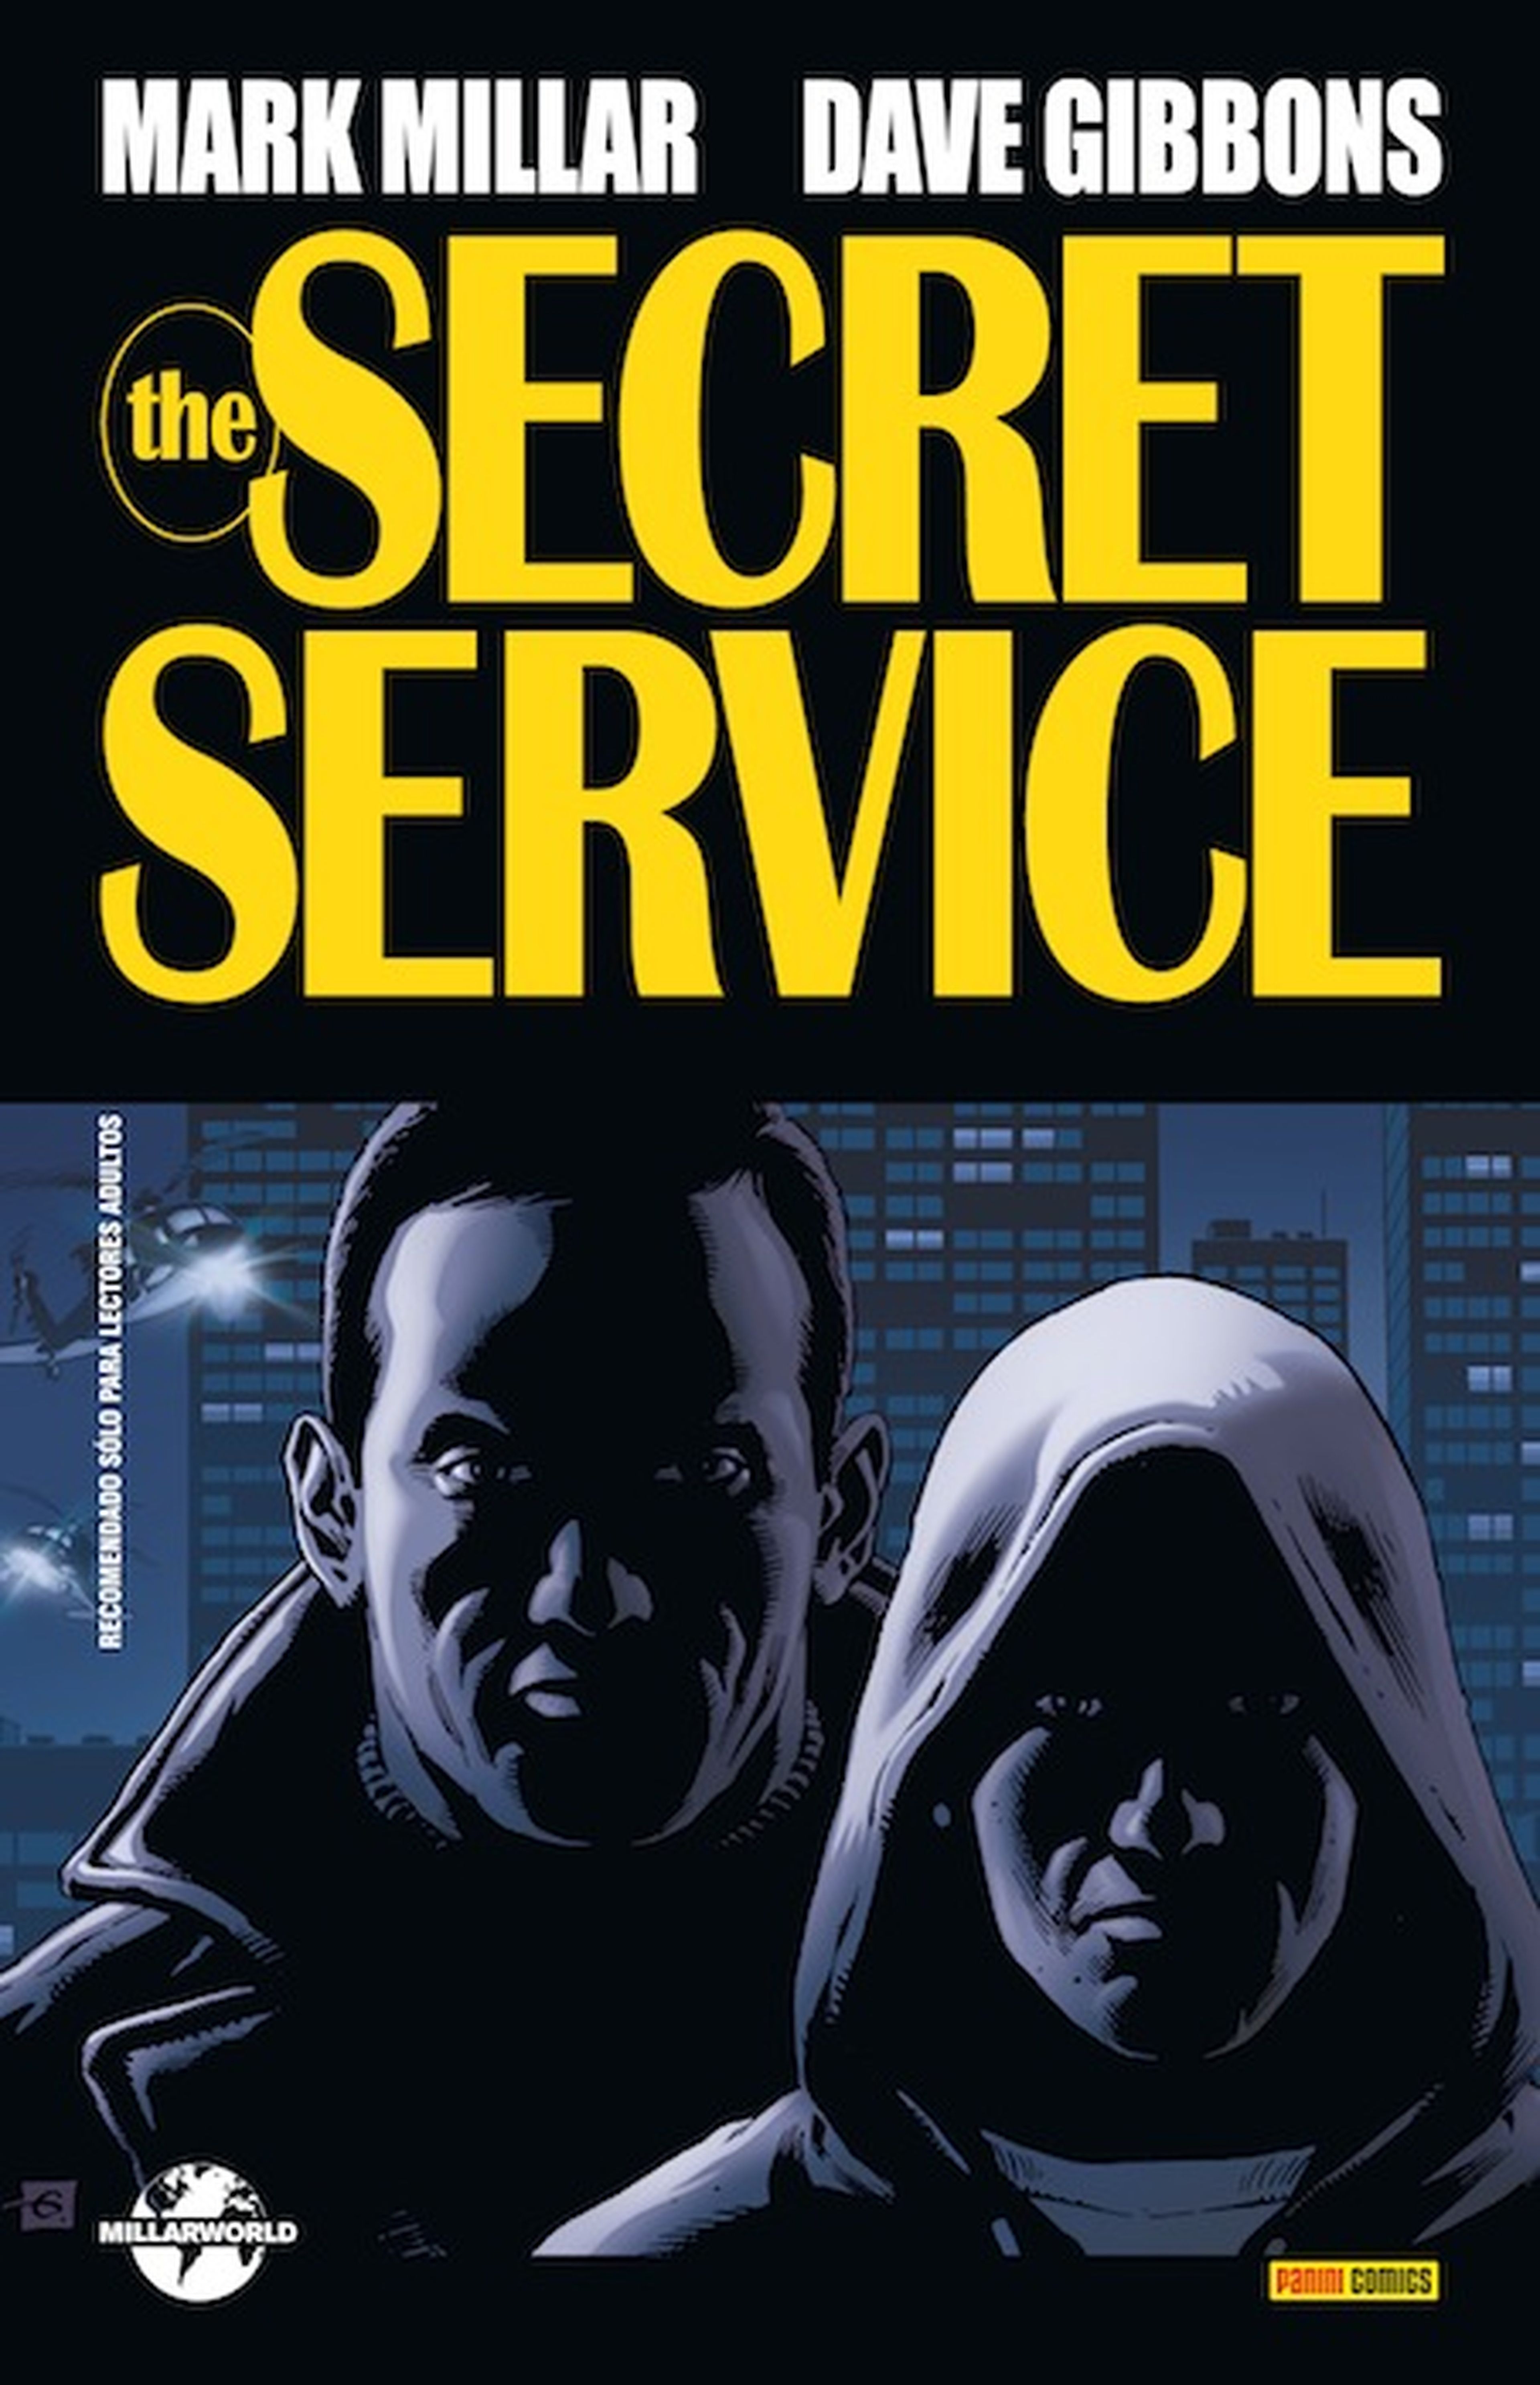 Panini publicará The Secret Service en octubre